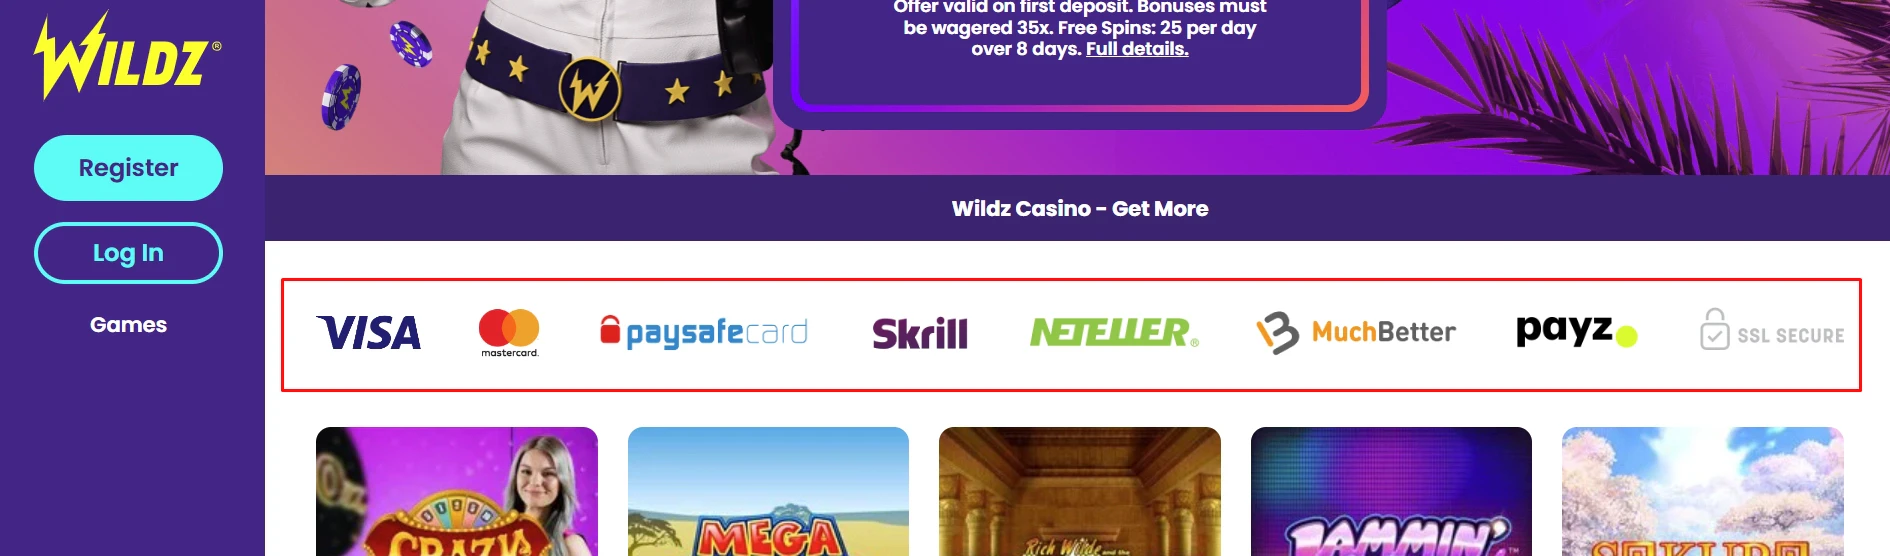 Wildz Casino Payment Methods